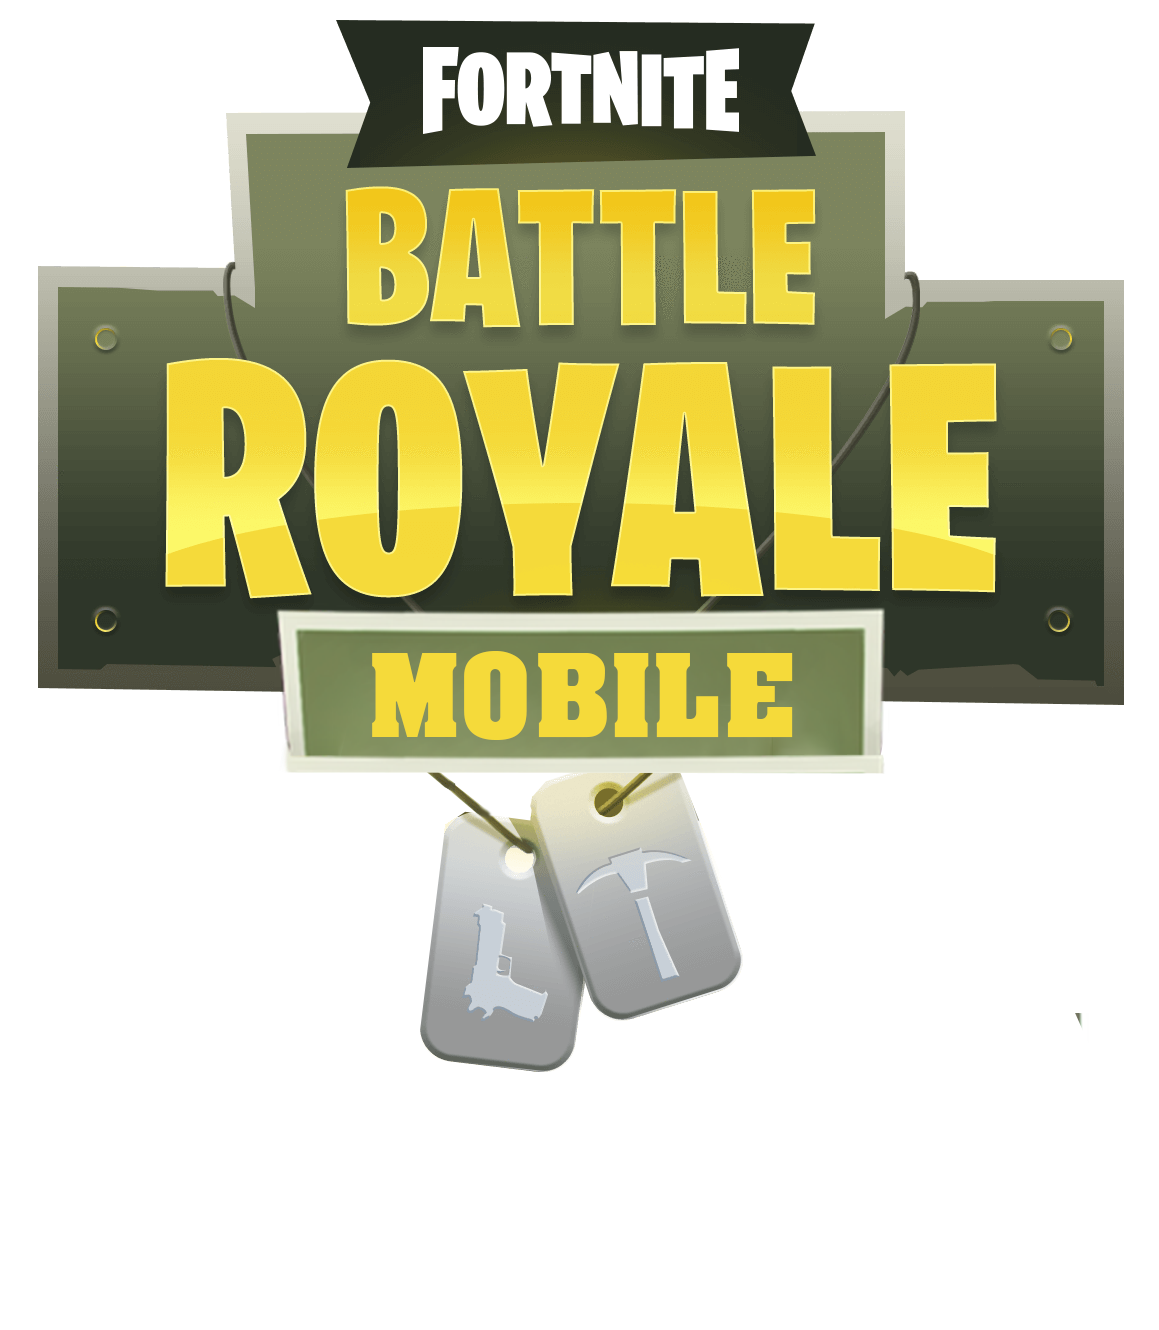 Download Fortnite Mobile Logo PNG Image for Free